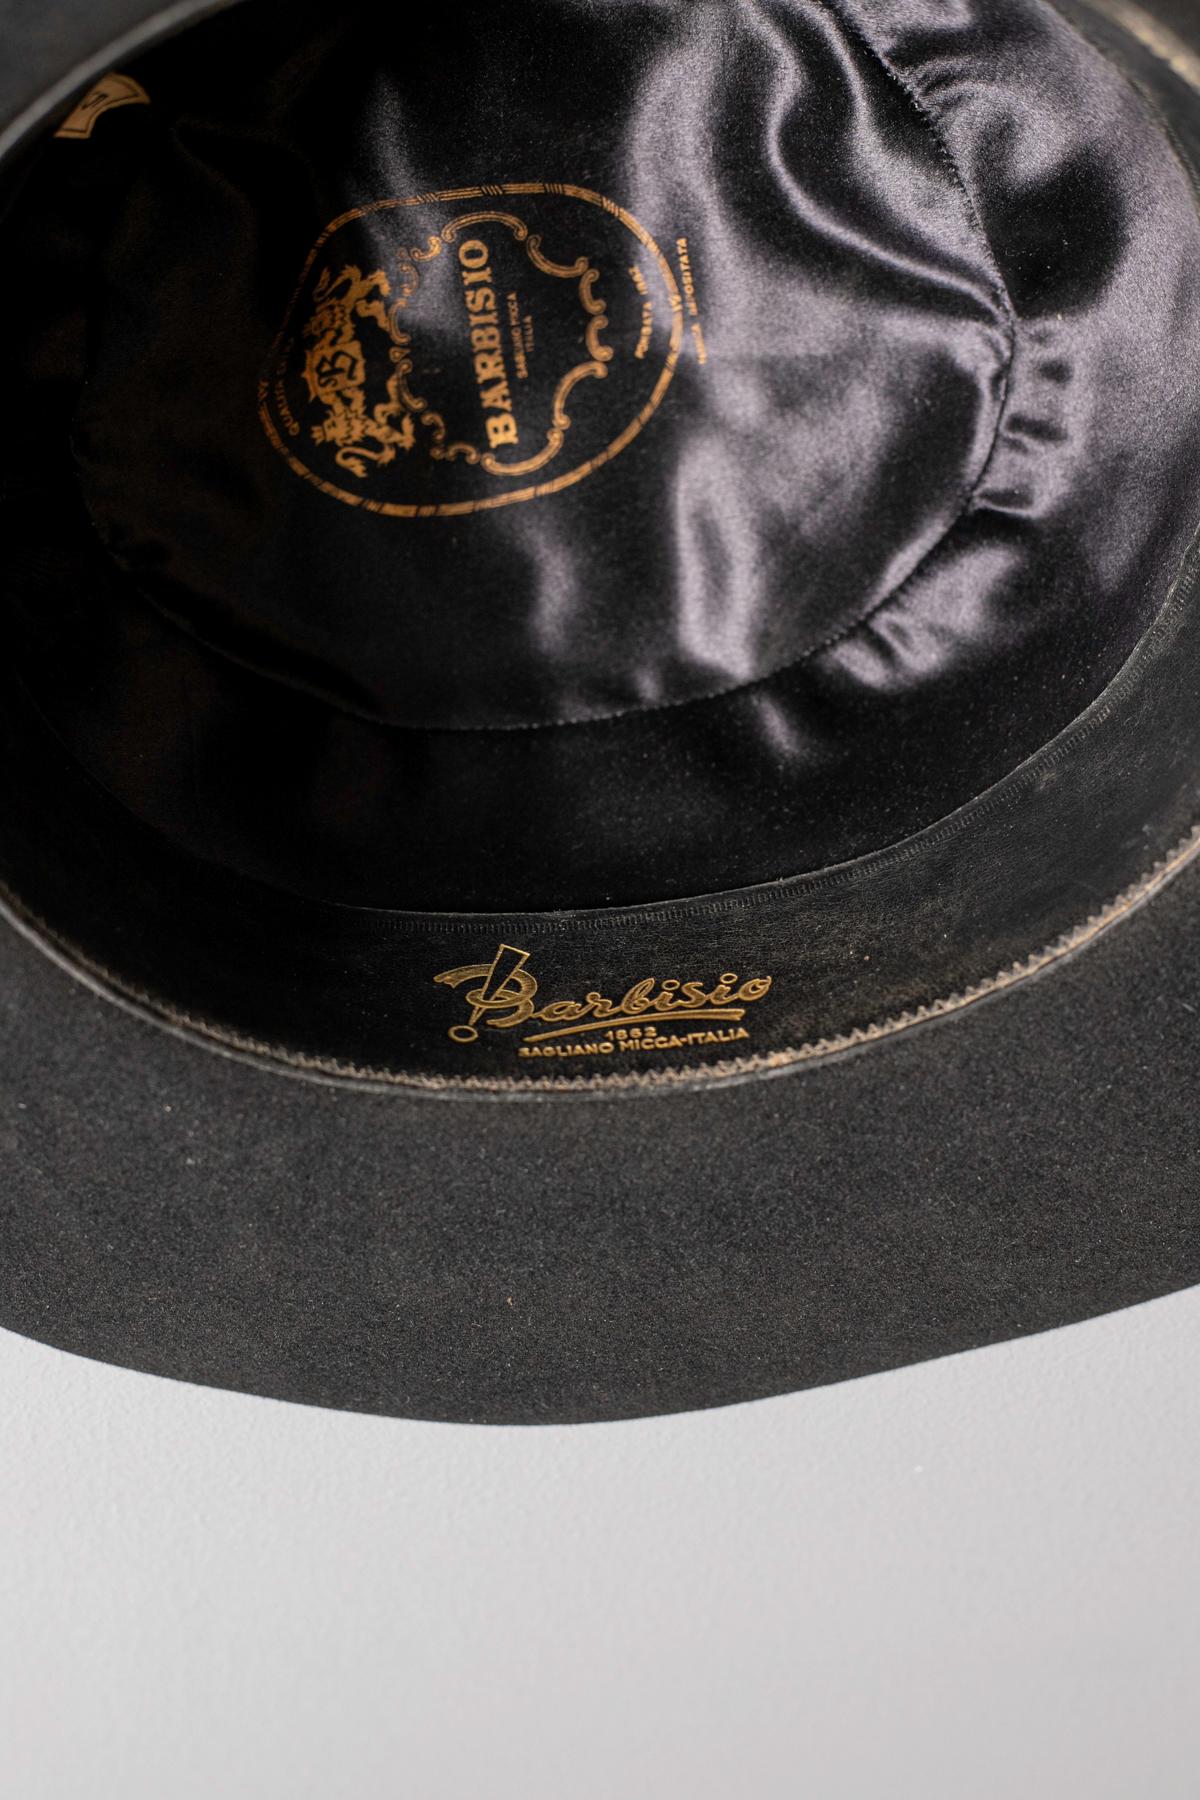 Barbisio Italian Vintage Black Hat  For Sale 1